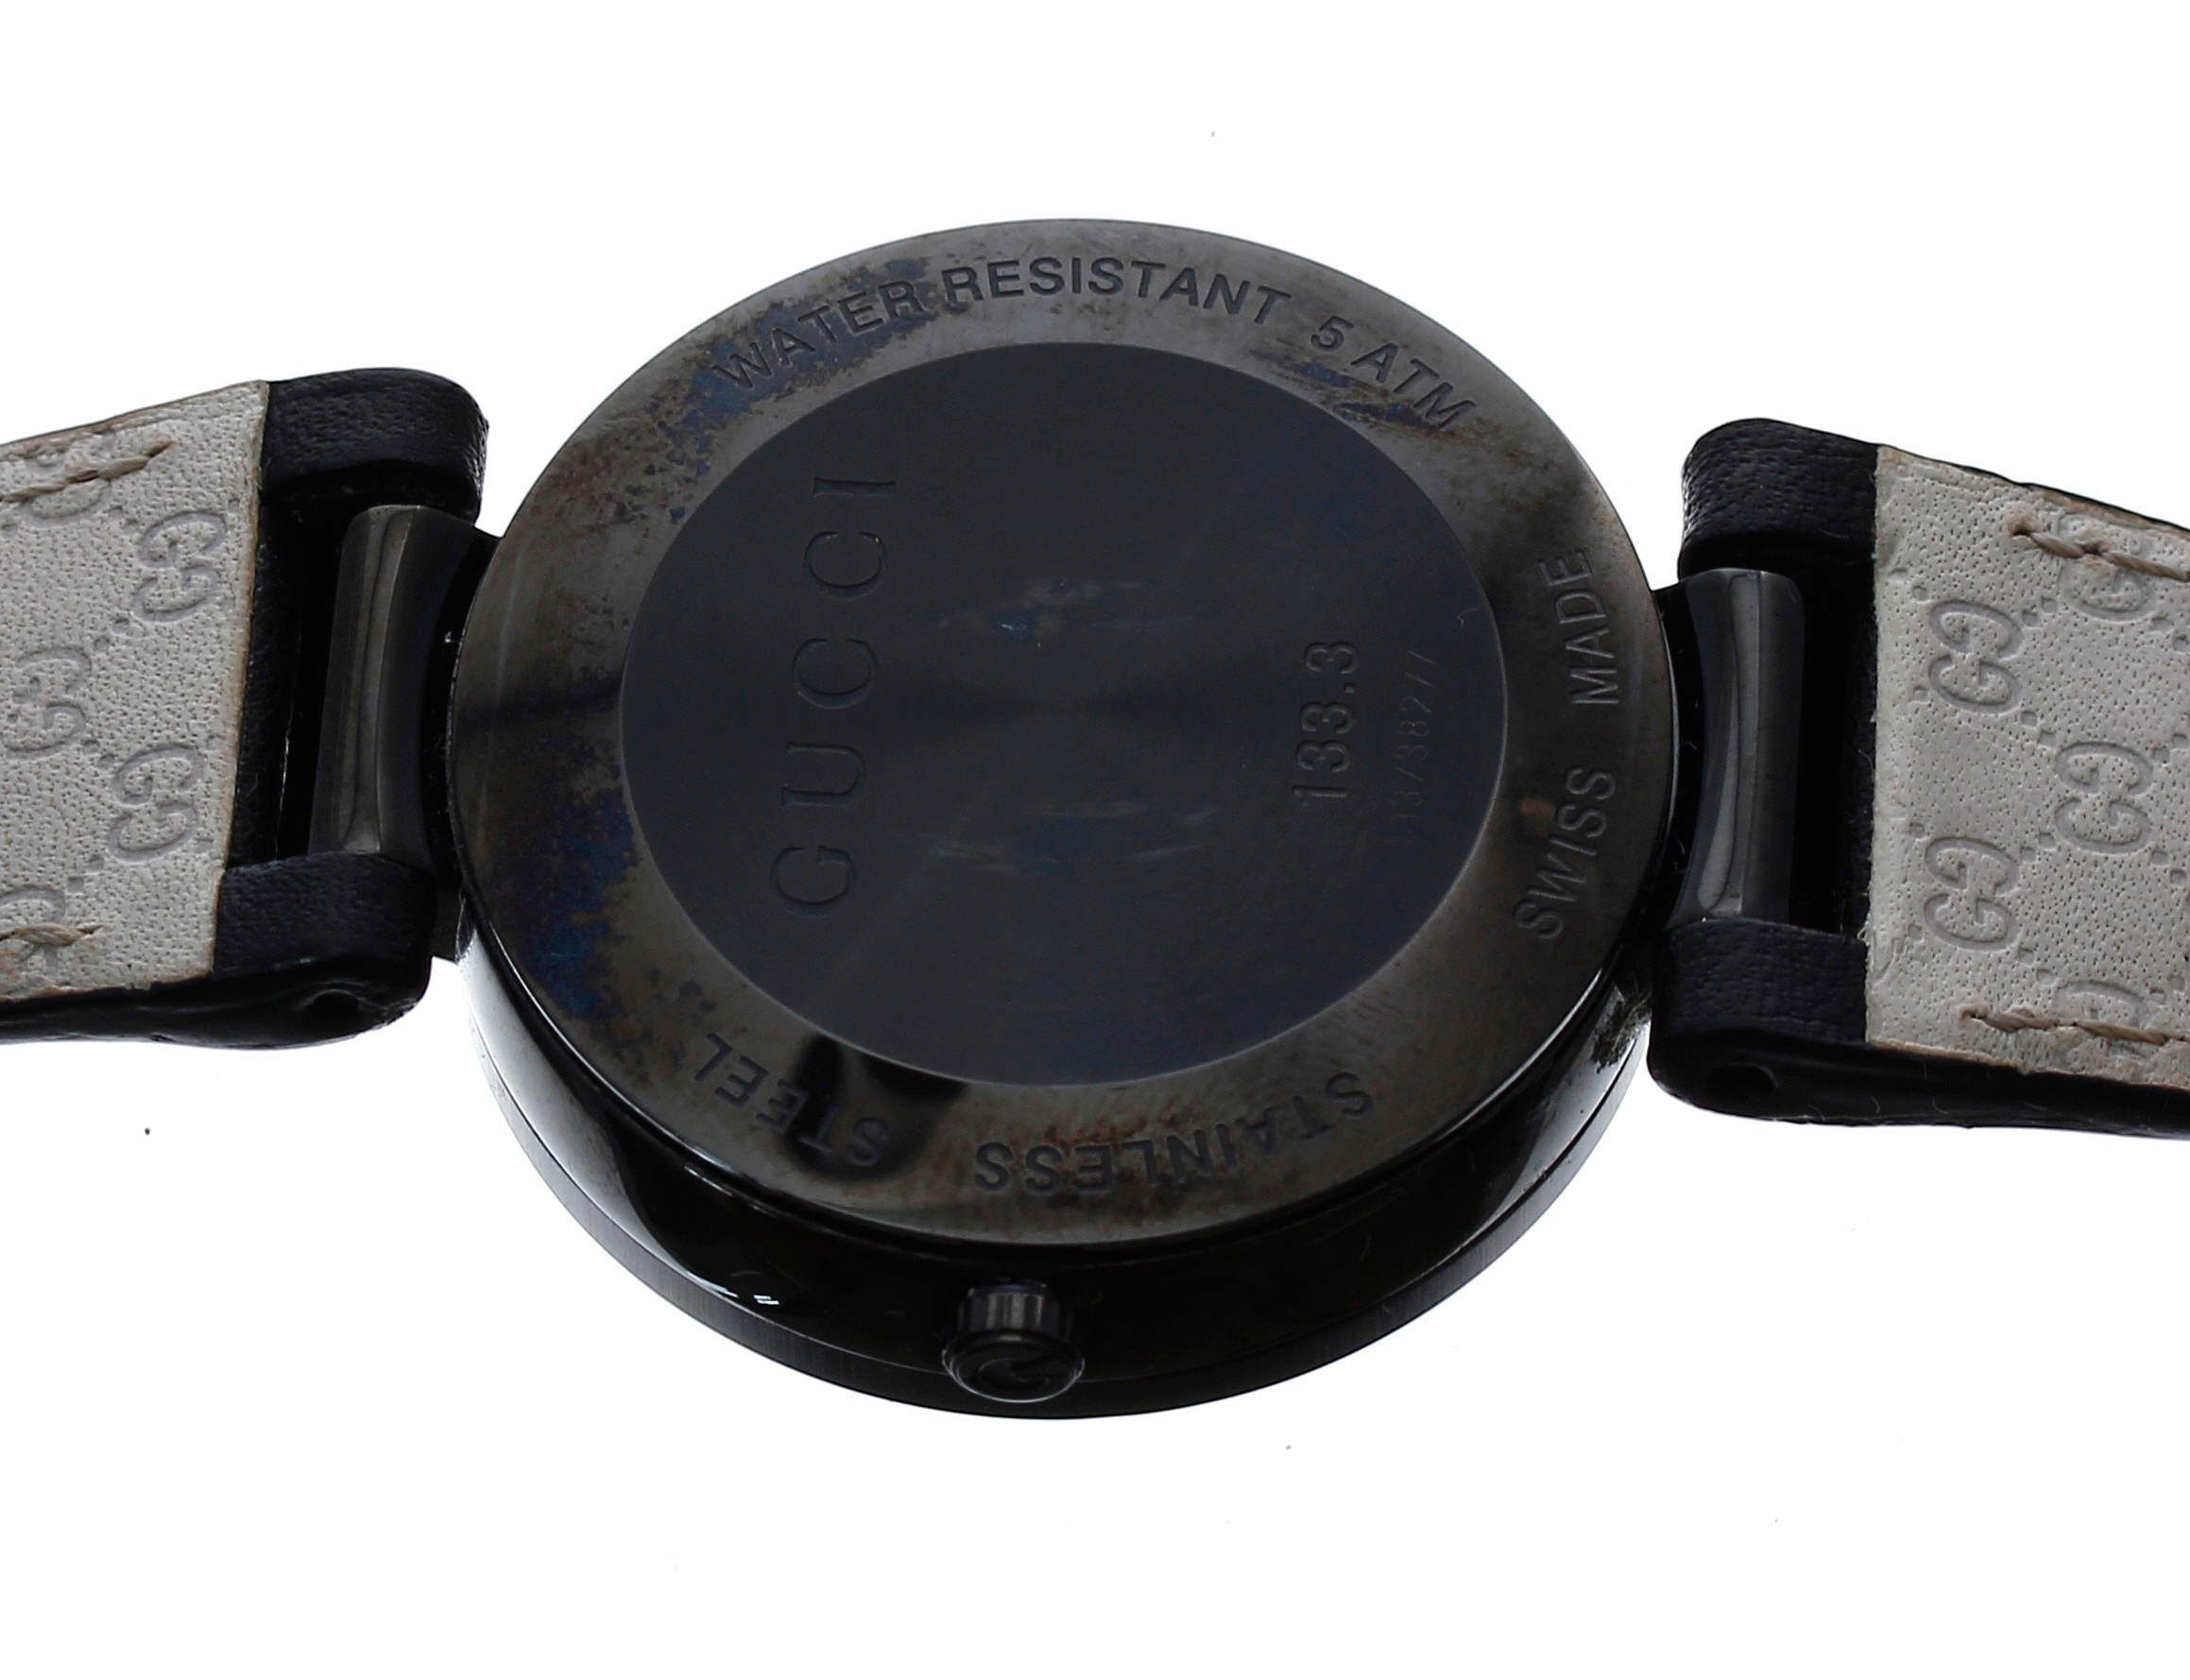 Gucci Interlocking-G ceramic wristwatch, reference no. 133.3, black dial, quartz, Gucci black - Image 2 of 2